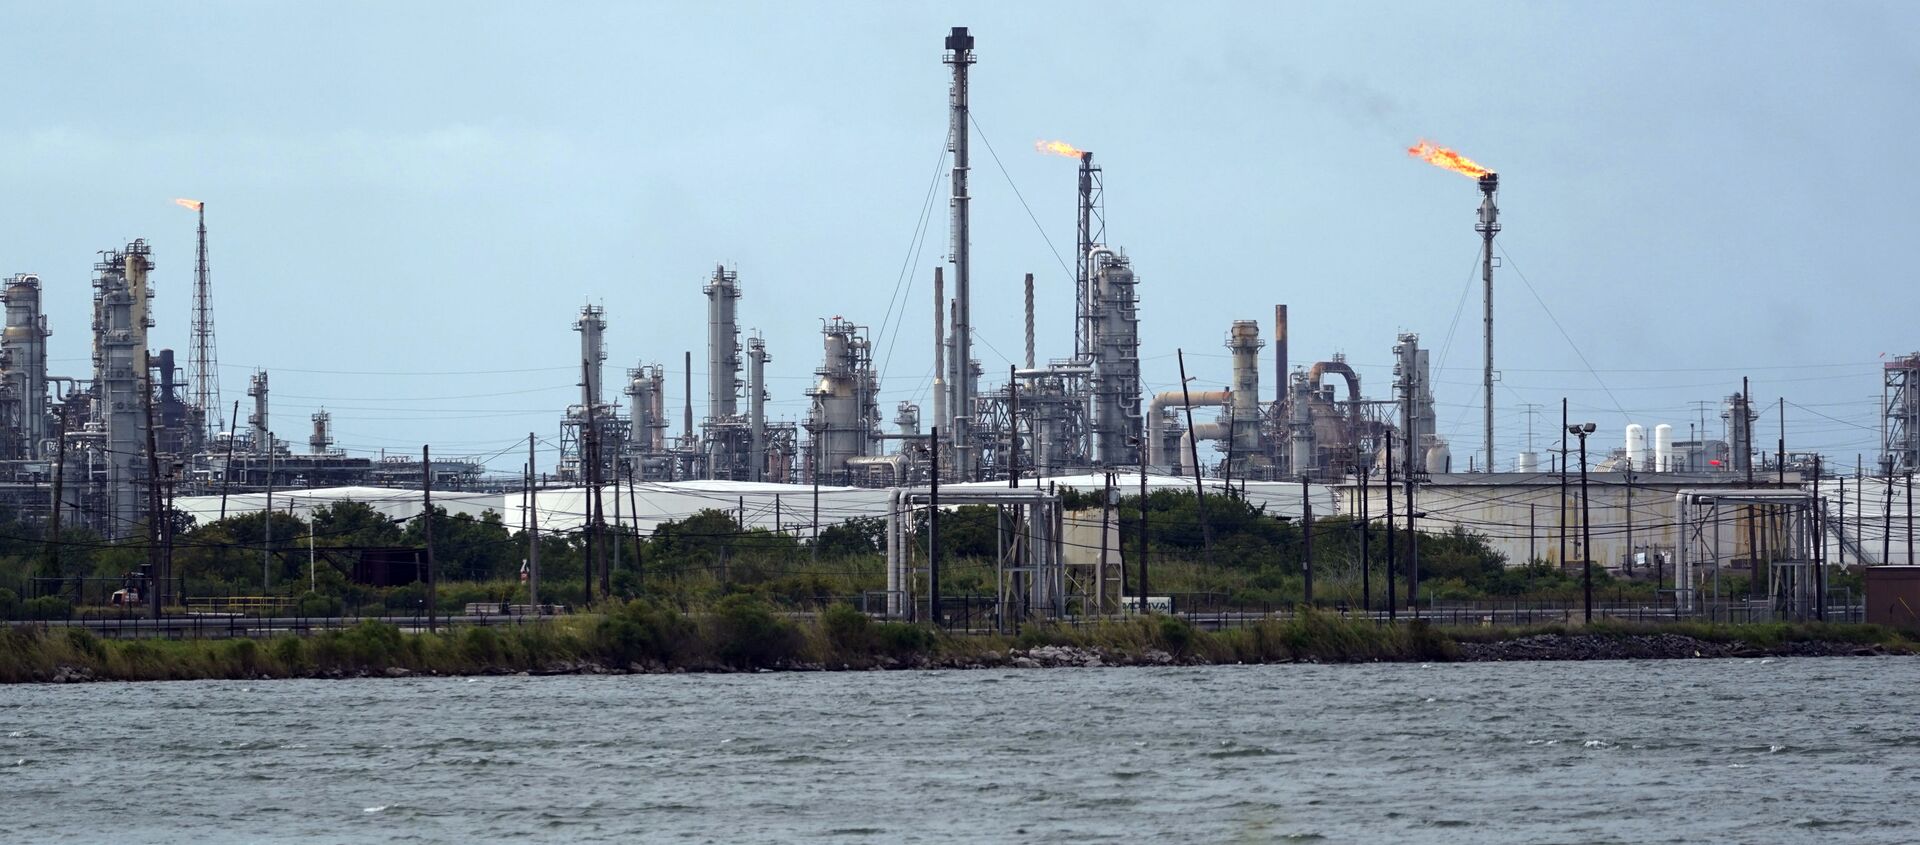 A refinery is seen along the water, Wednesday, Aug. 26, 2020, in Port Arthur, Texas. - Sputnik International, 1920, 16.12.2020